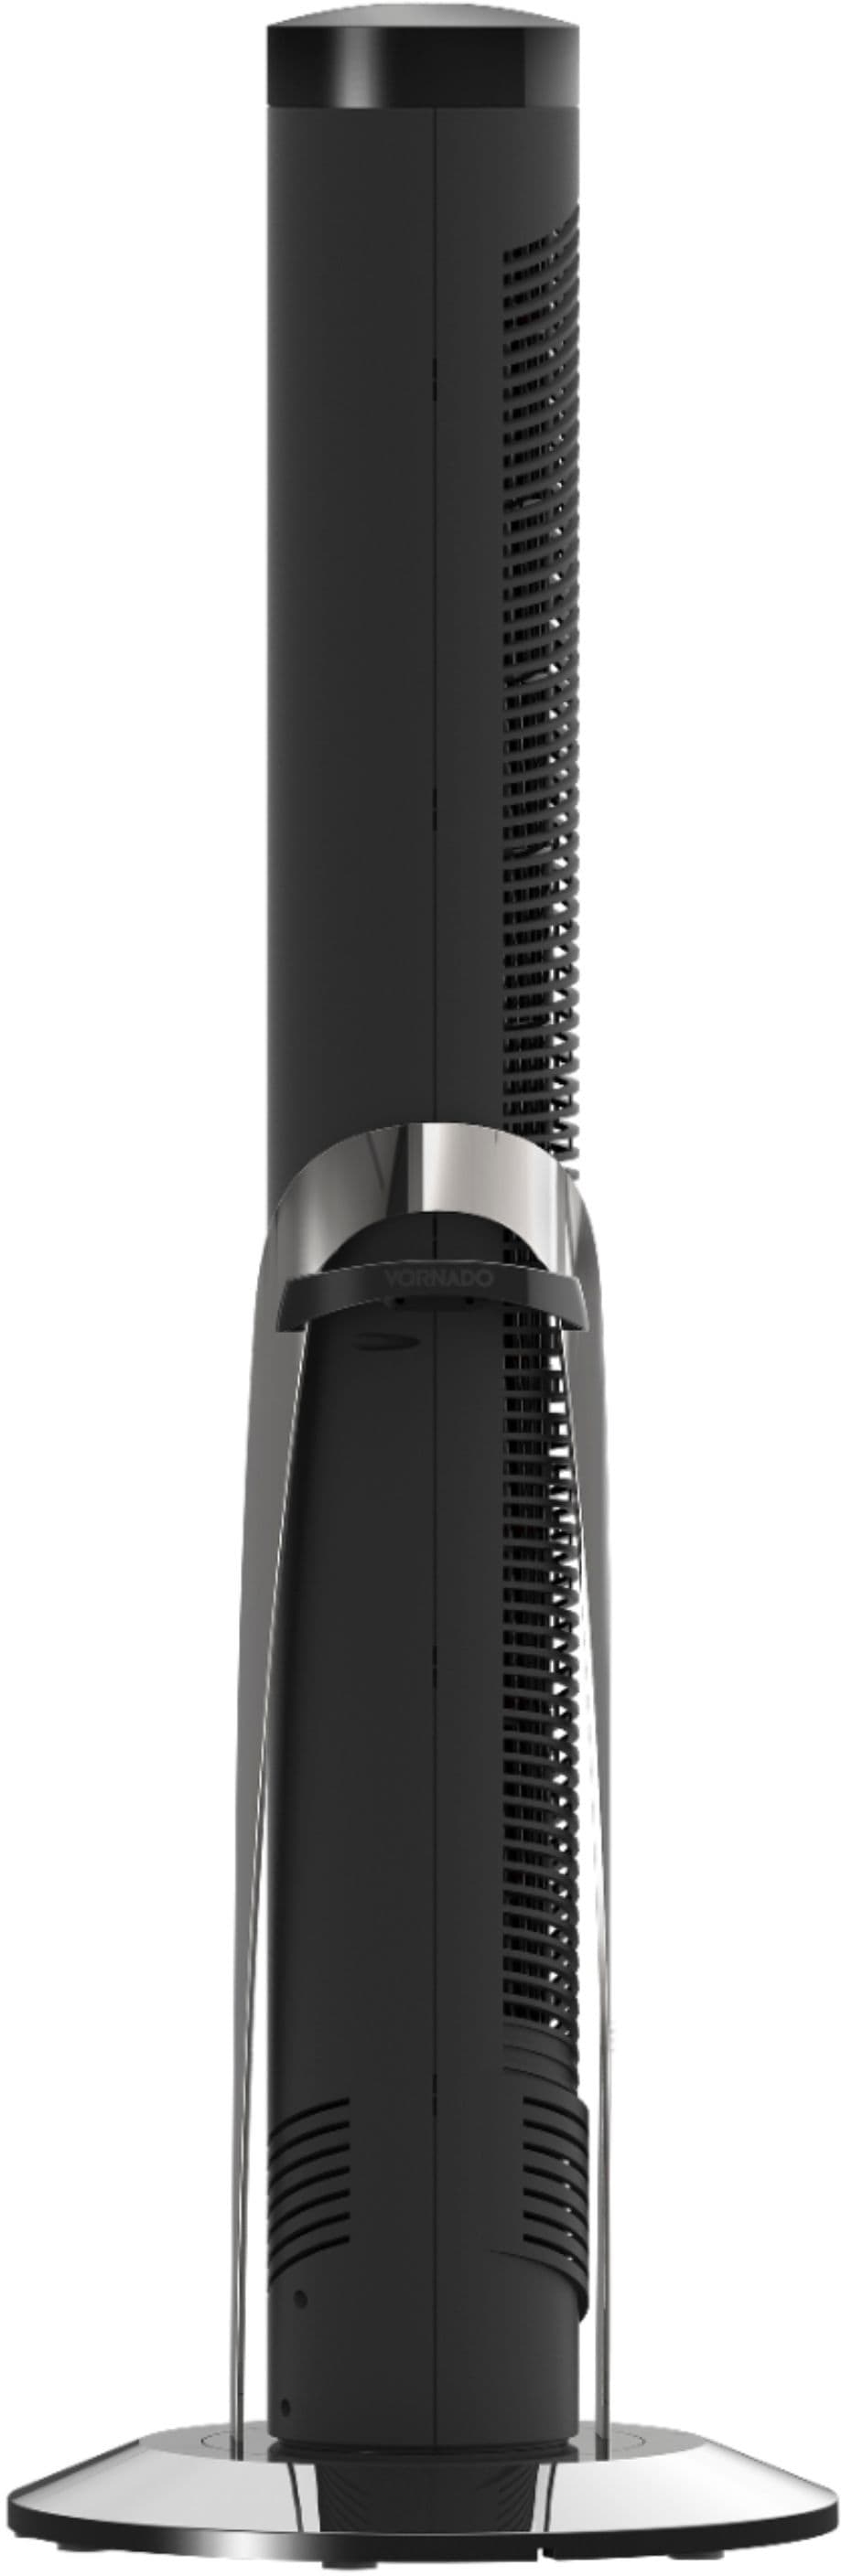 Vornado - OSCR37 Oscillating Tower Fan with Remote - Black_2